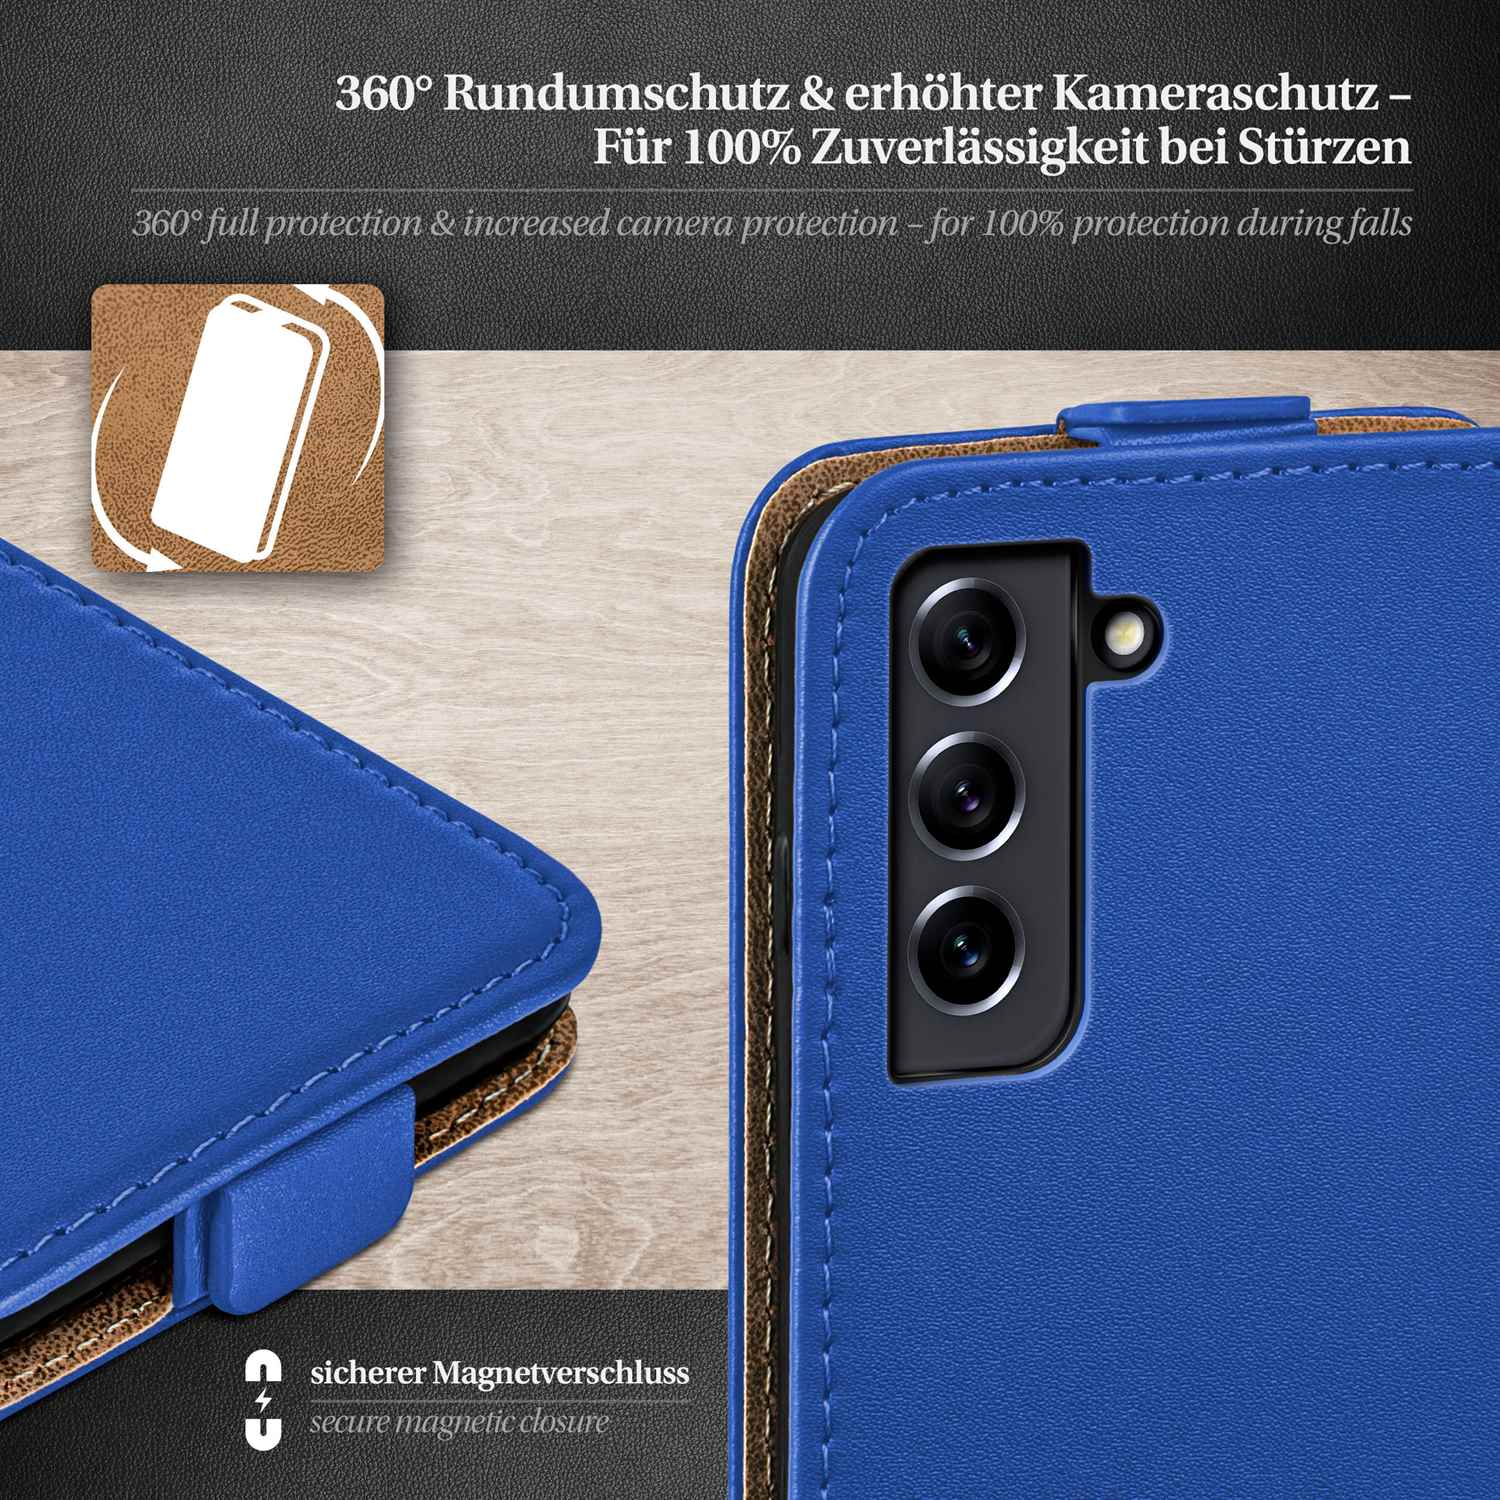 Galaxy S21 Samsung, Cover, MOEX Case, Royal-Blue Flip 5G, FE Flip